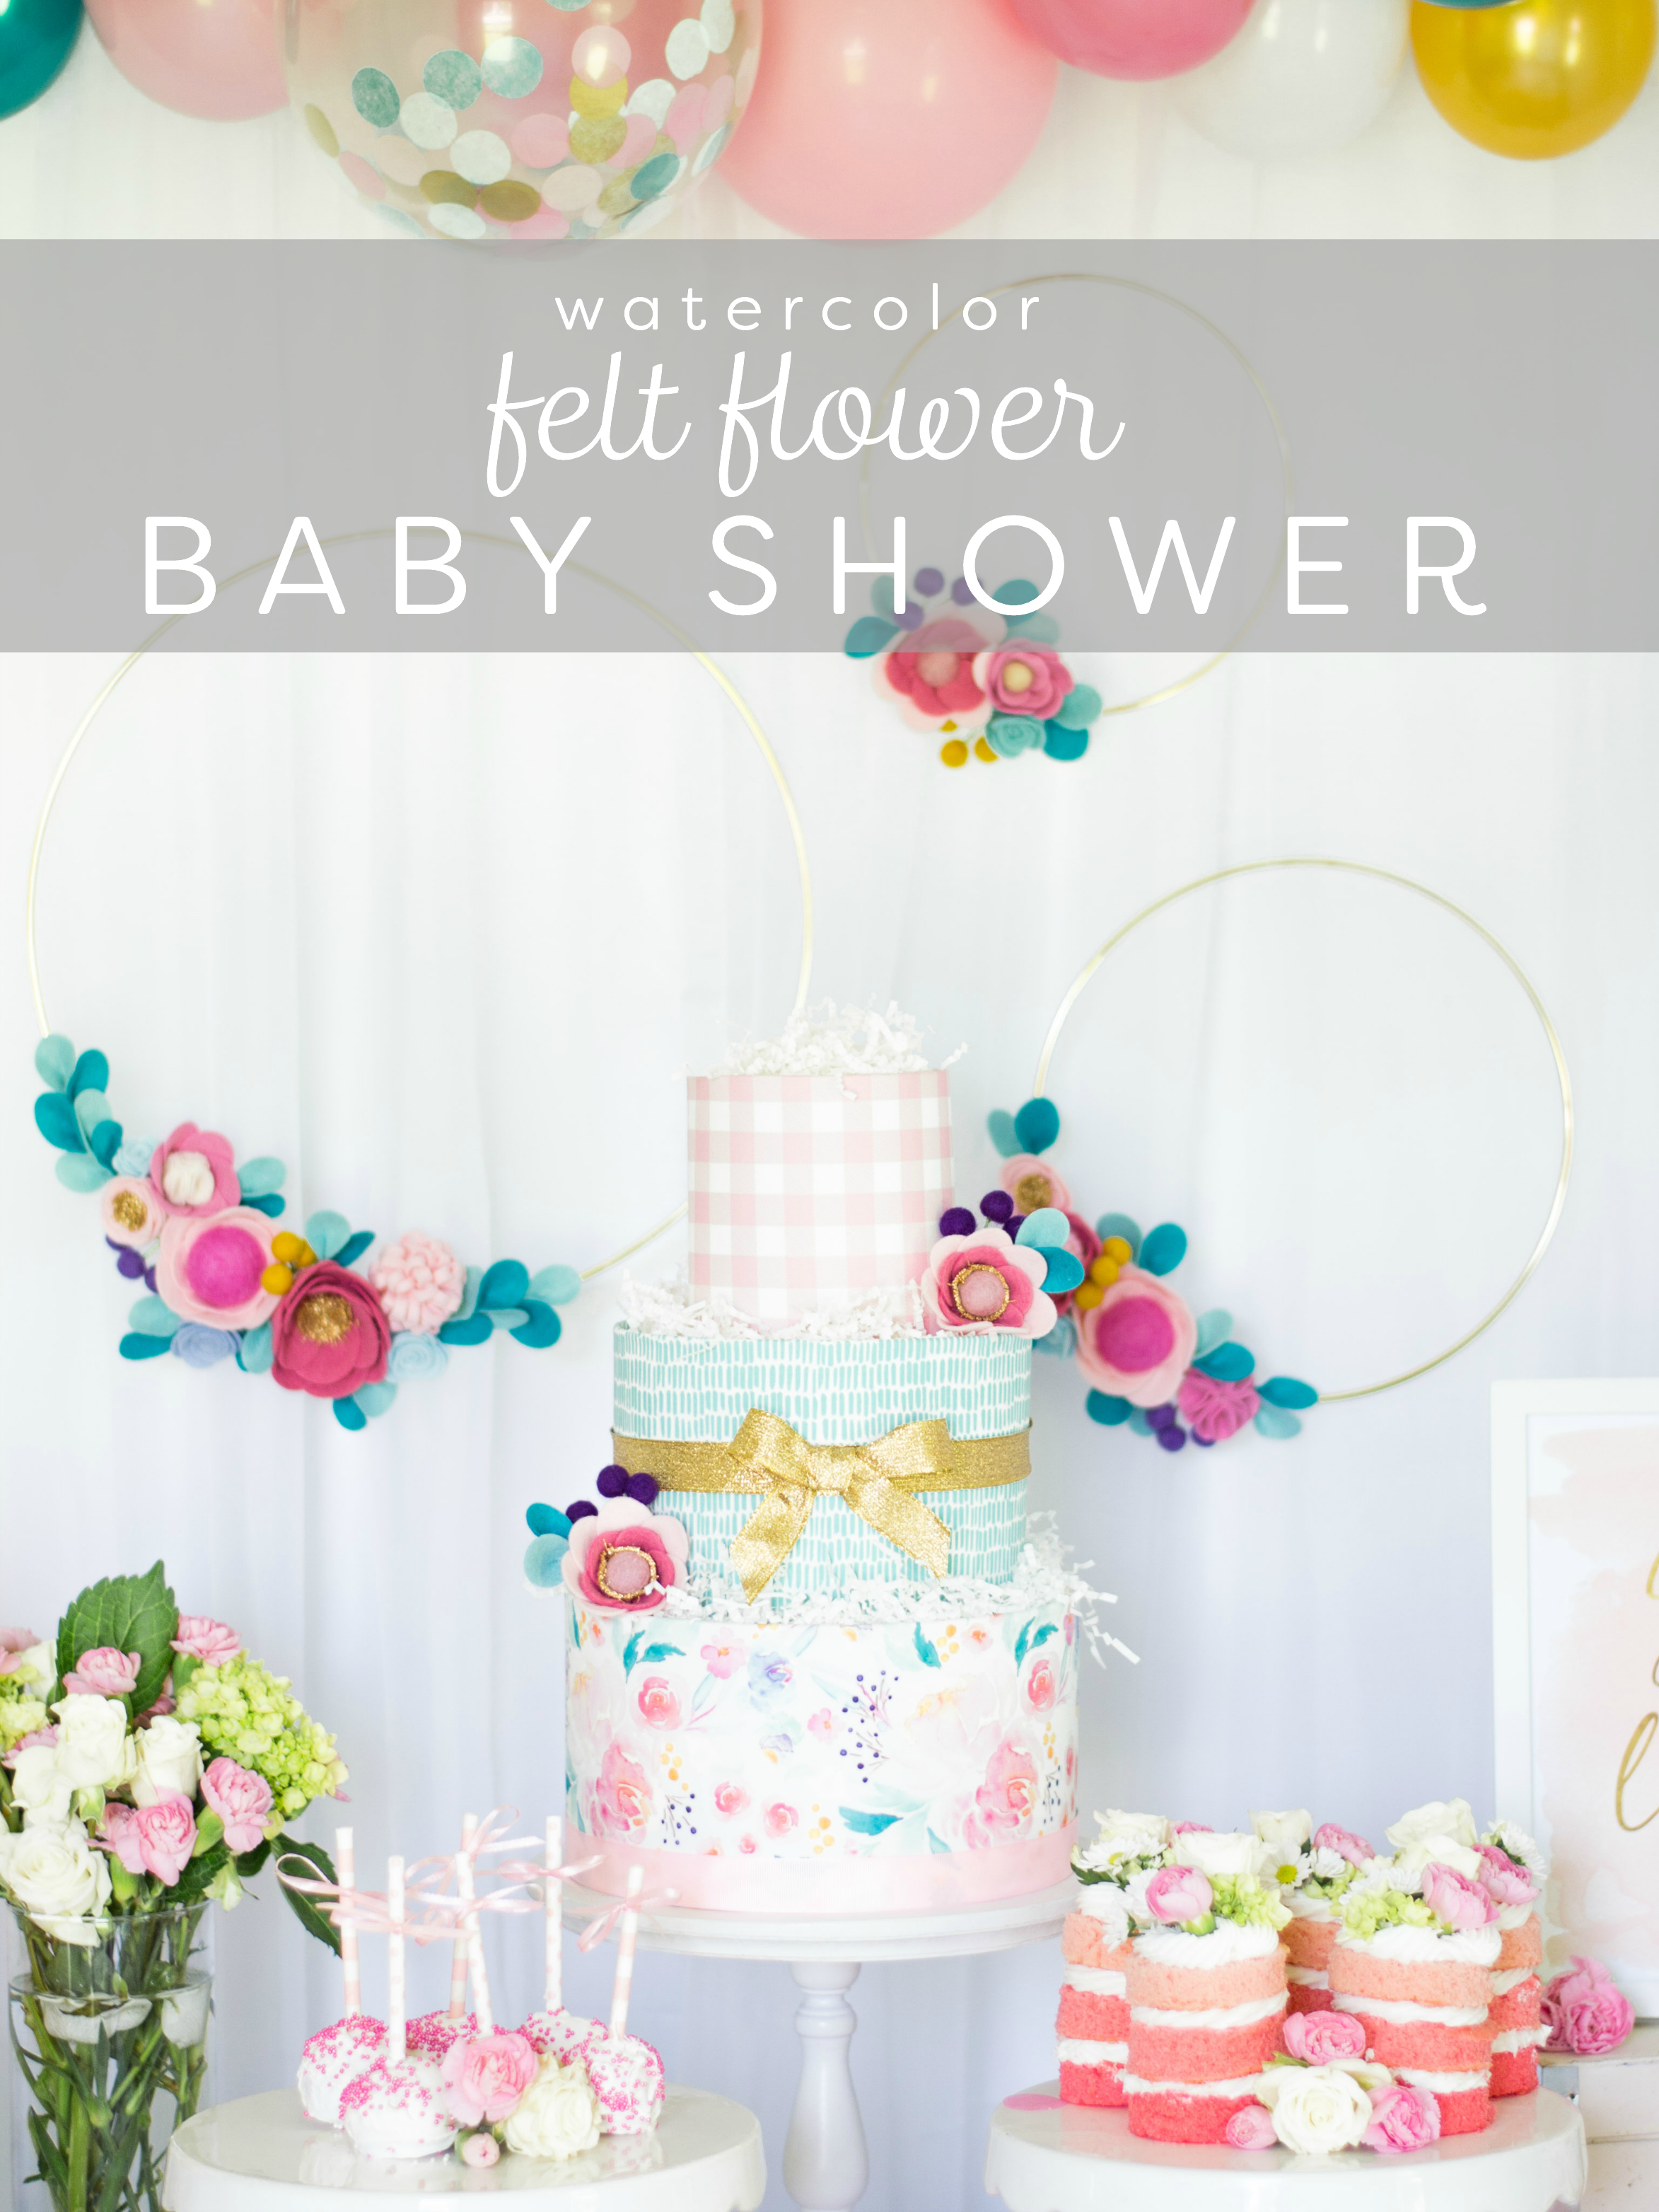 watercolor felt flower baby shower